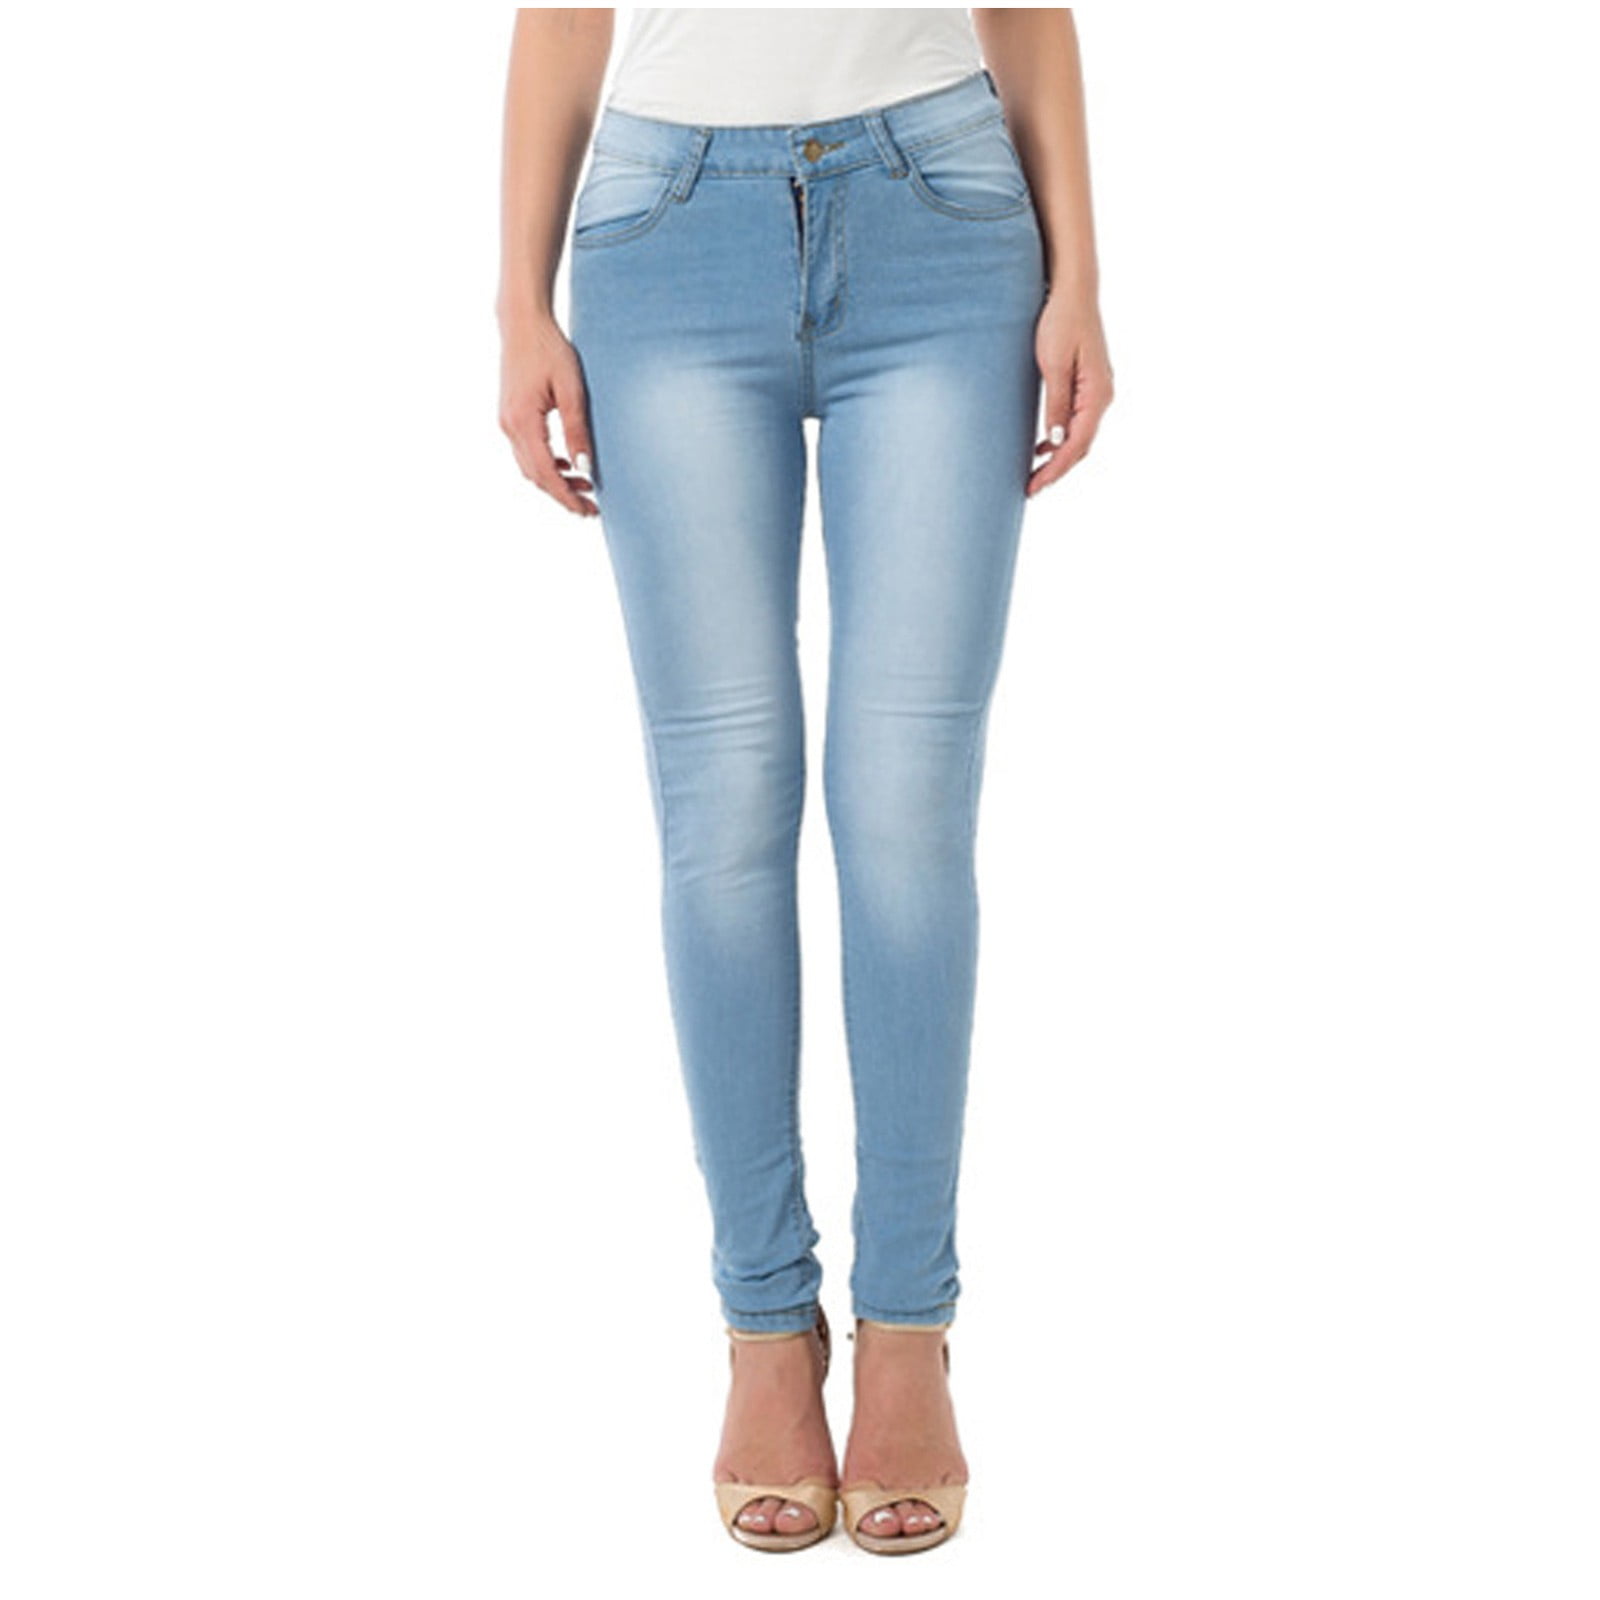 Shascullfites Grey Denim Jeans for Women Skinny Slim Washed Bum Lift  Classic Stretch Streetwear Thin Jeggings - AliExpress